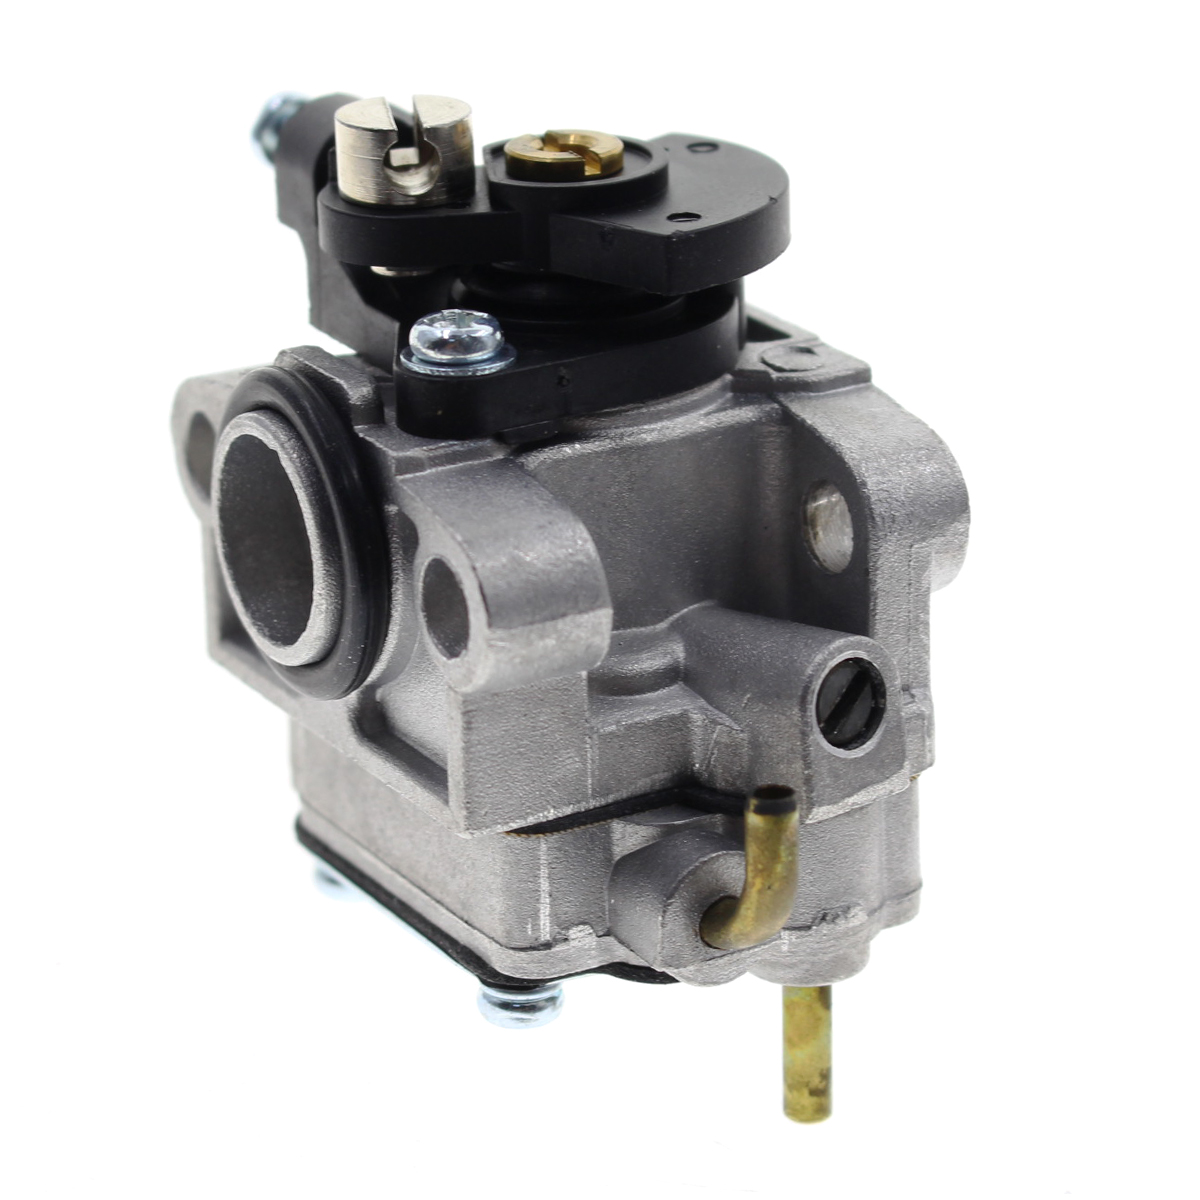 New Carburetor Gasket Filter for Craftsman 30CC 4-cycle Gas Trimmer